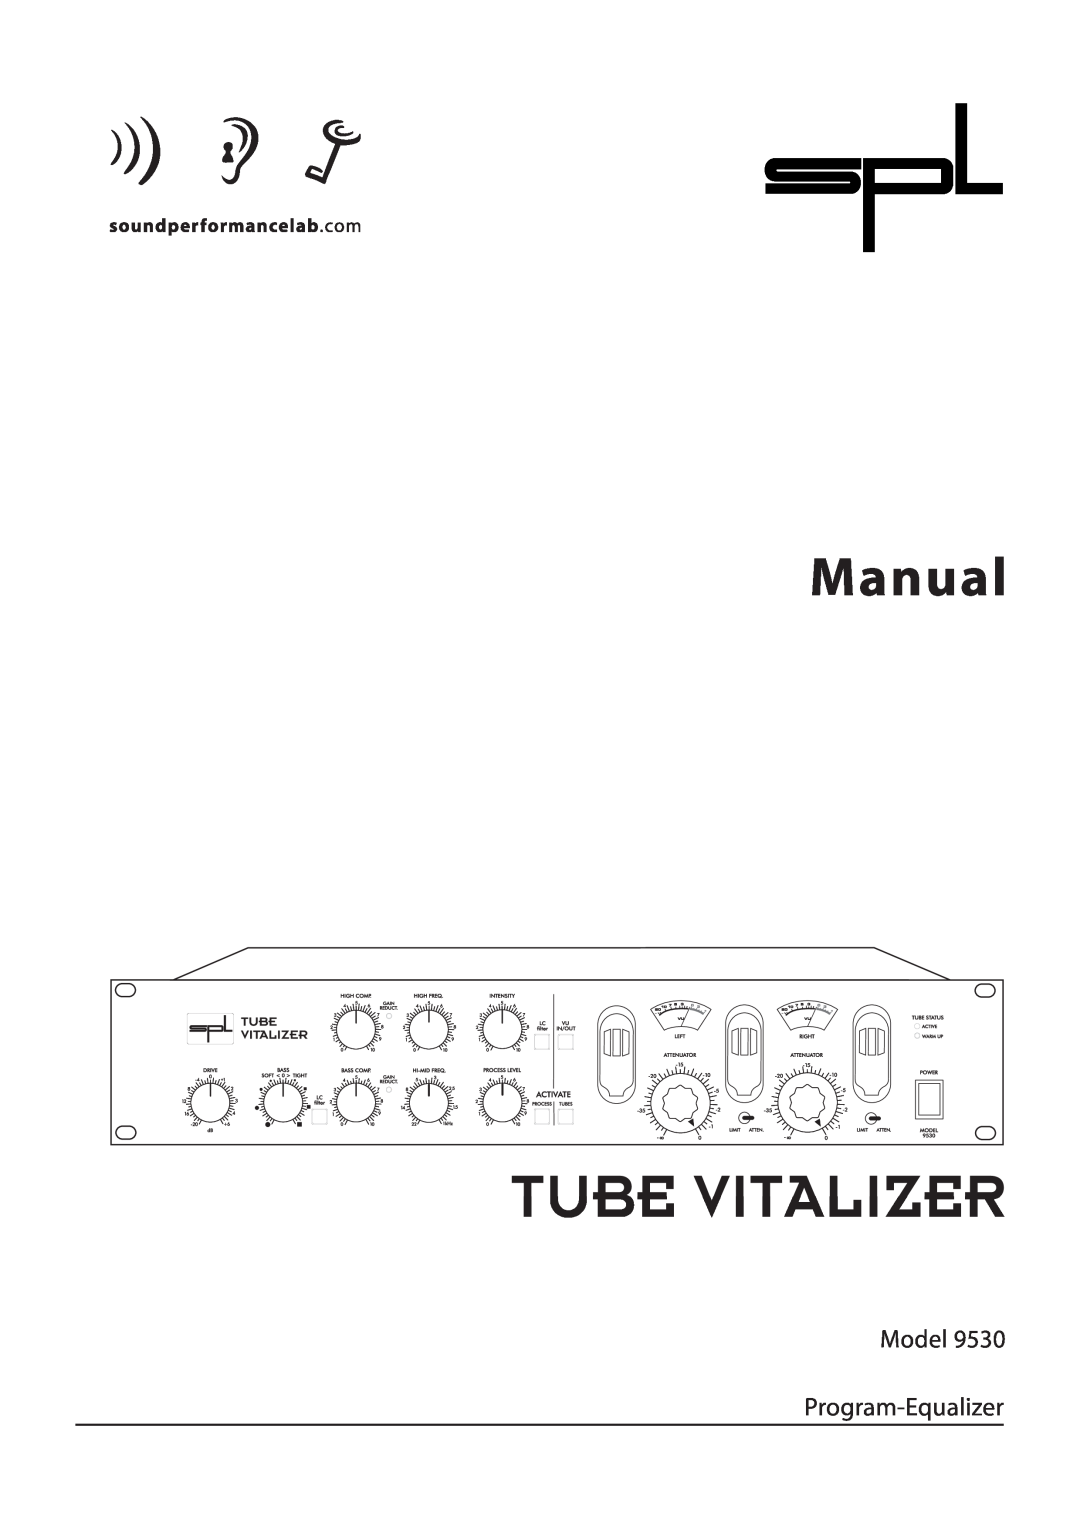 Sound Performance Lab 9530 manual Tube Vitalizer, Manual, Model, Program-Equalizer 